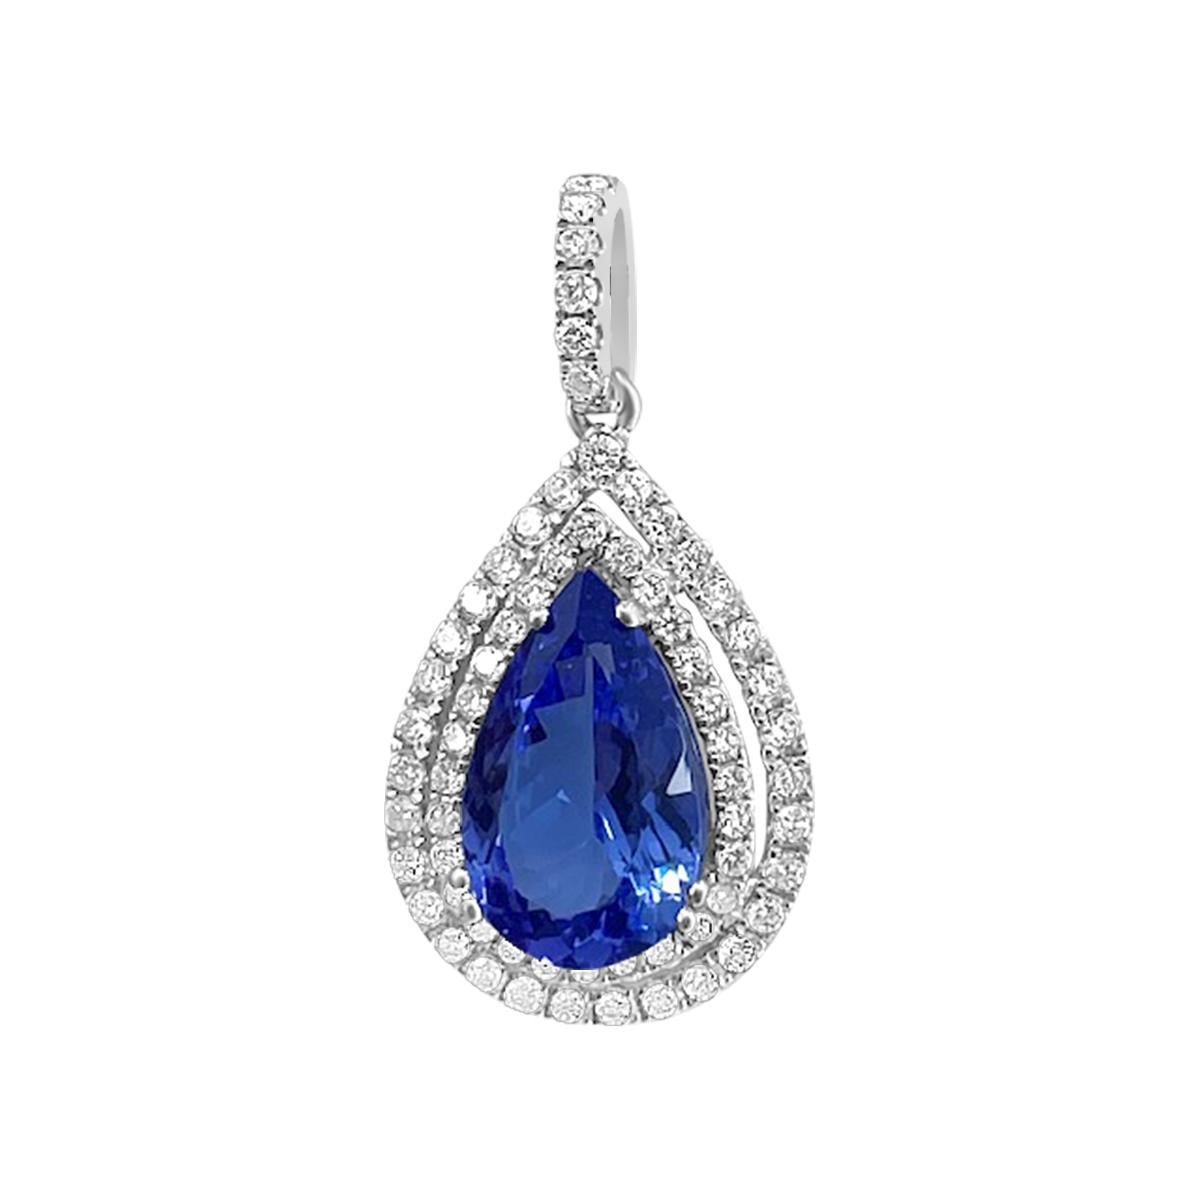 Elegant pear shape tanzanite and diamond pendant. Beautifuly cut tanzanite. Lovely open blue color.

Style# PEP22399A
Tanzanite: Pear 14x9mm 3.97cts
Diamond: 66pcs 0.92cts